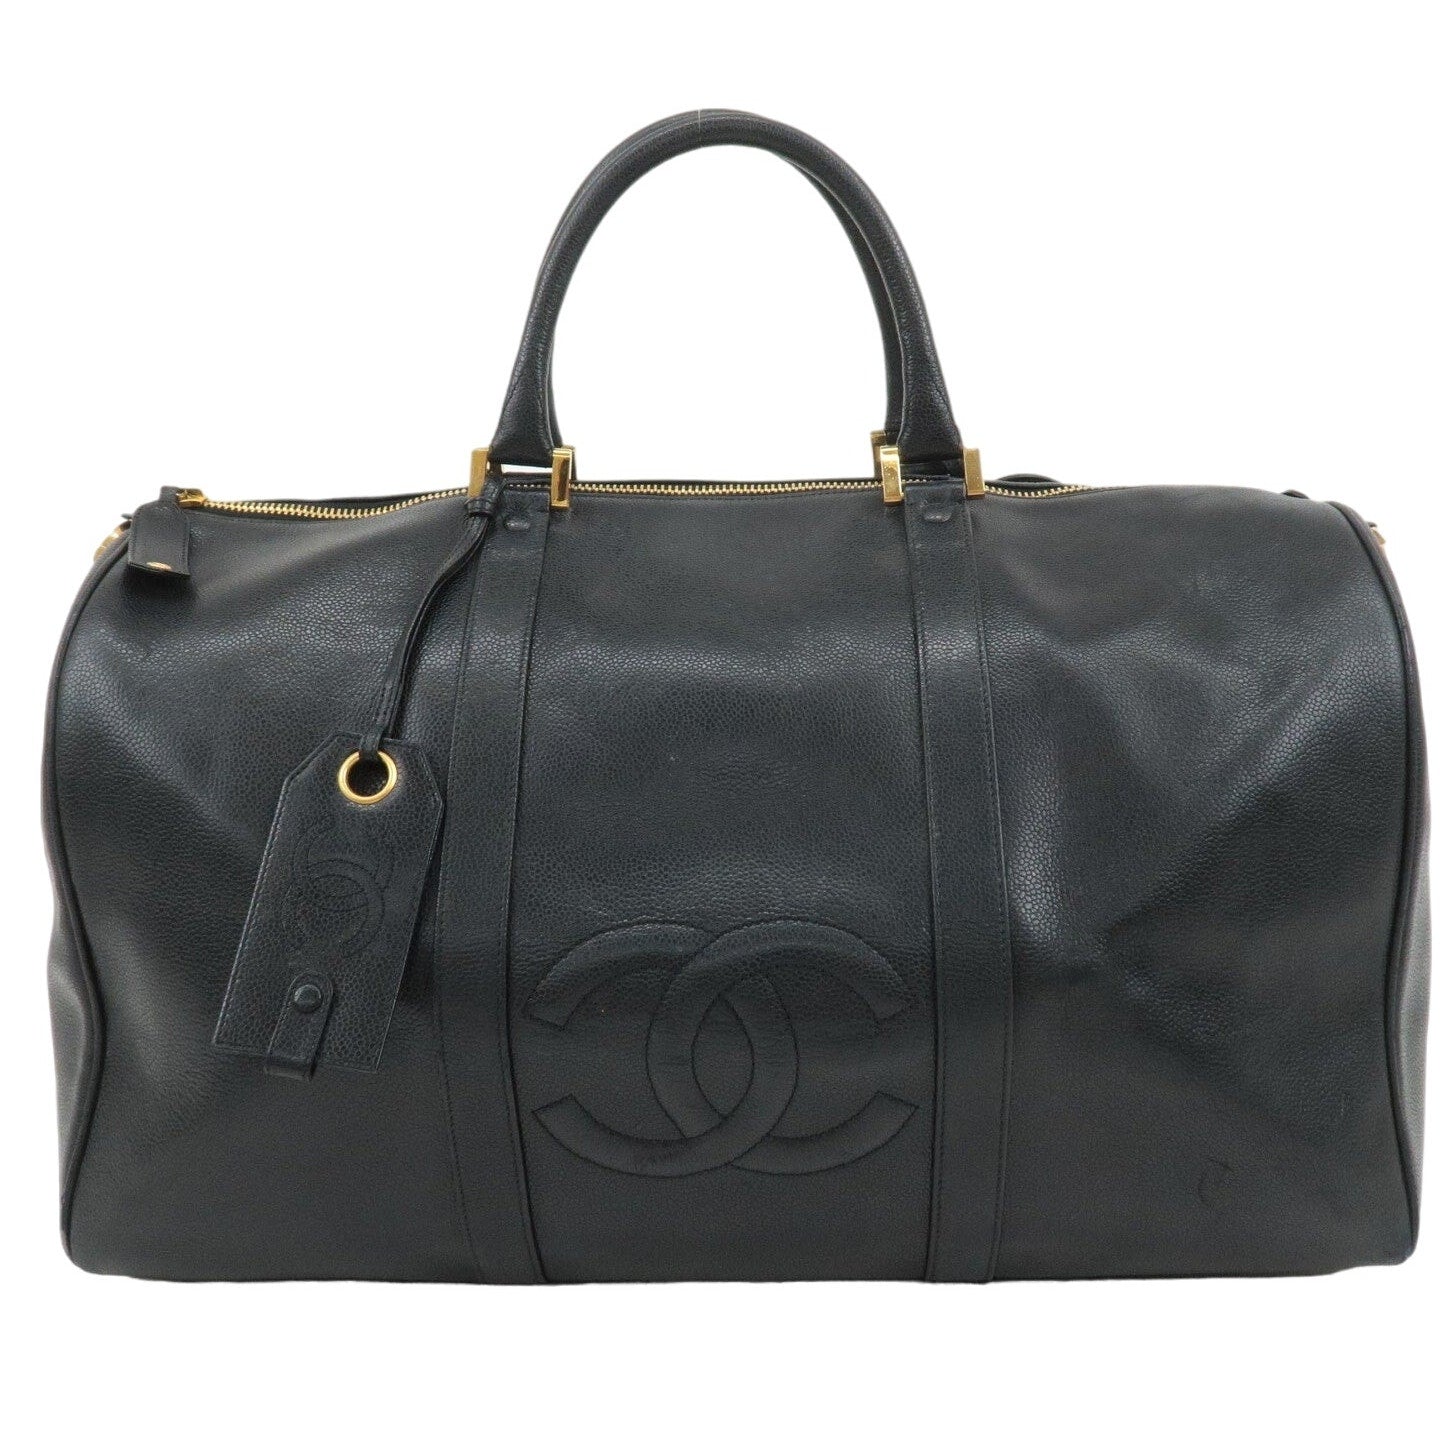 Authentic CHANEL Boston Bag Travel Bag Black